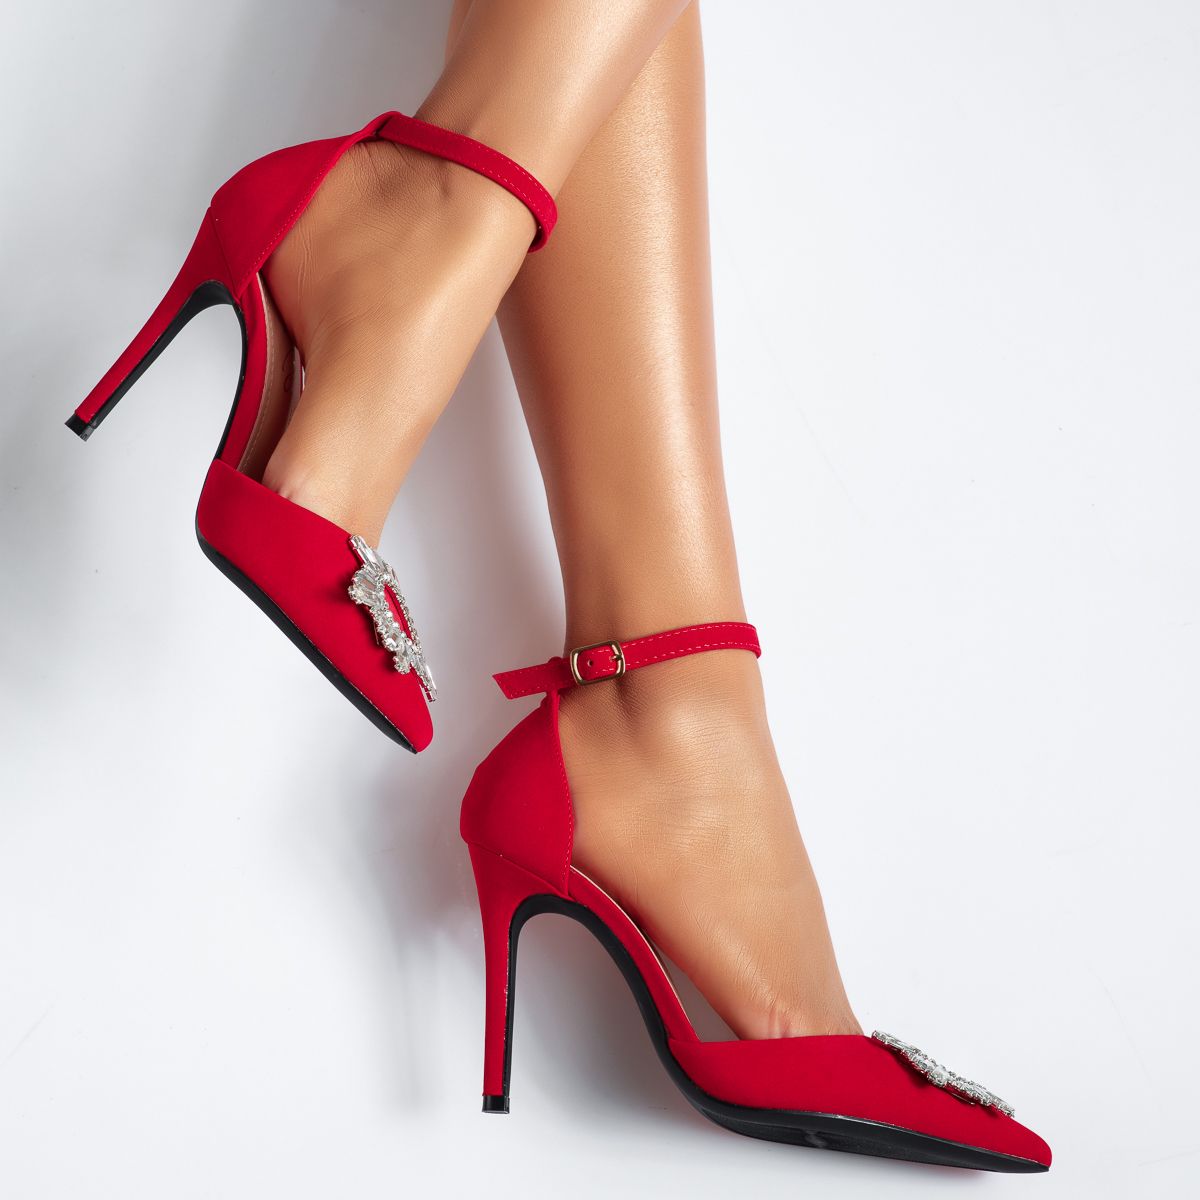 Pantofi Dama cu Toc Oscar Rosii #14111